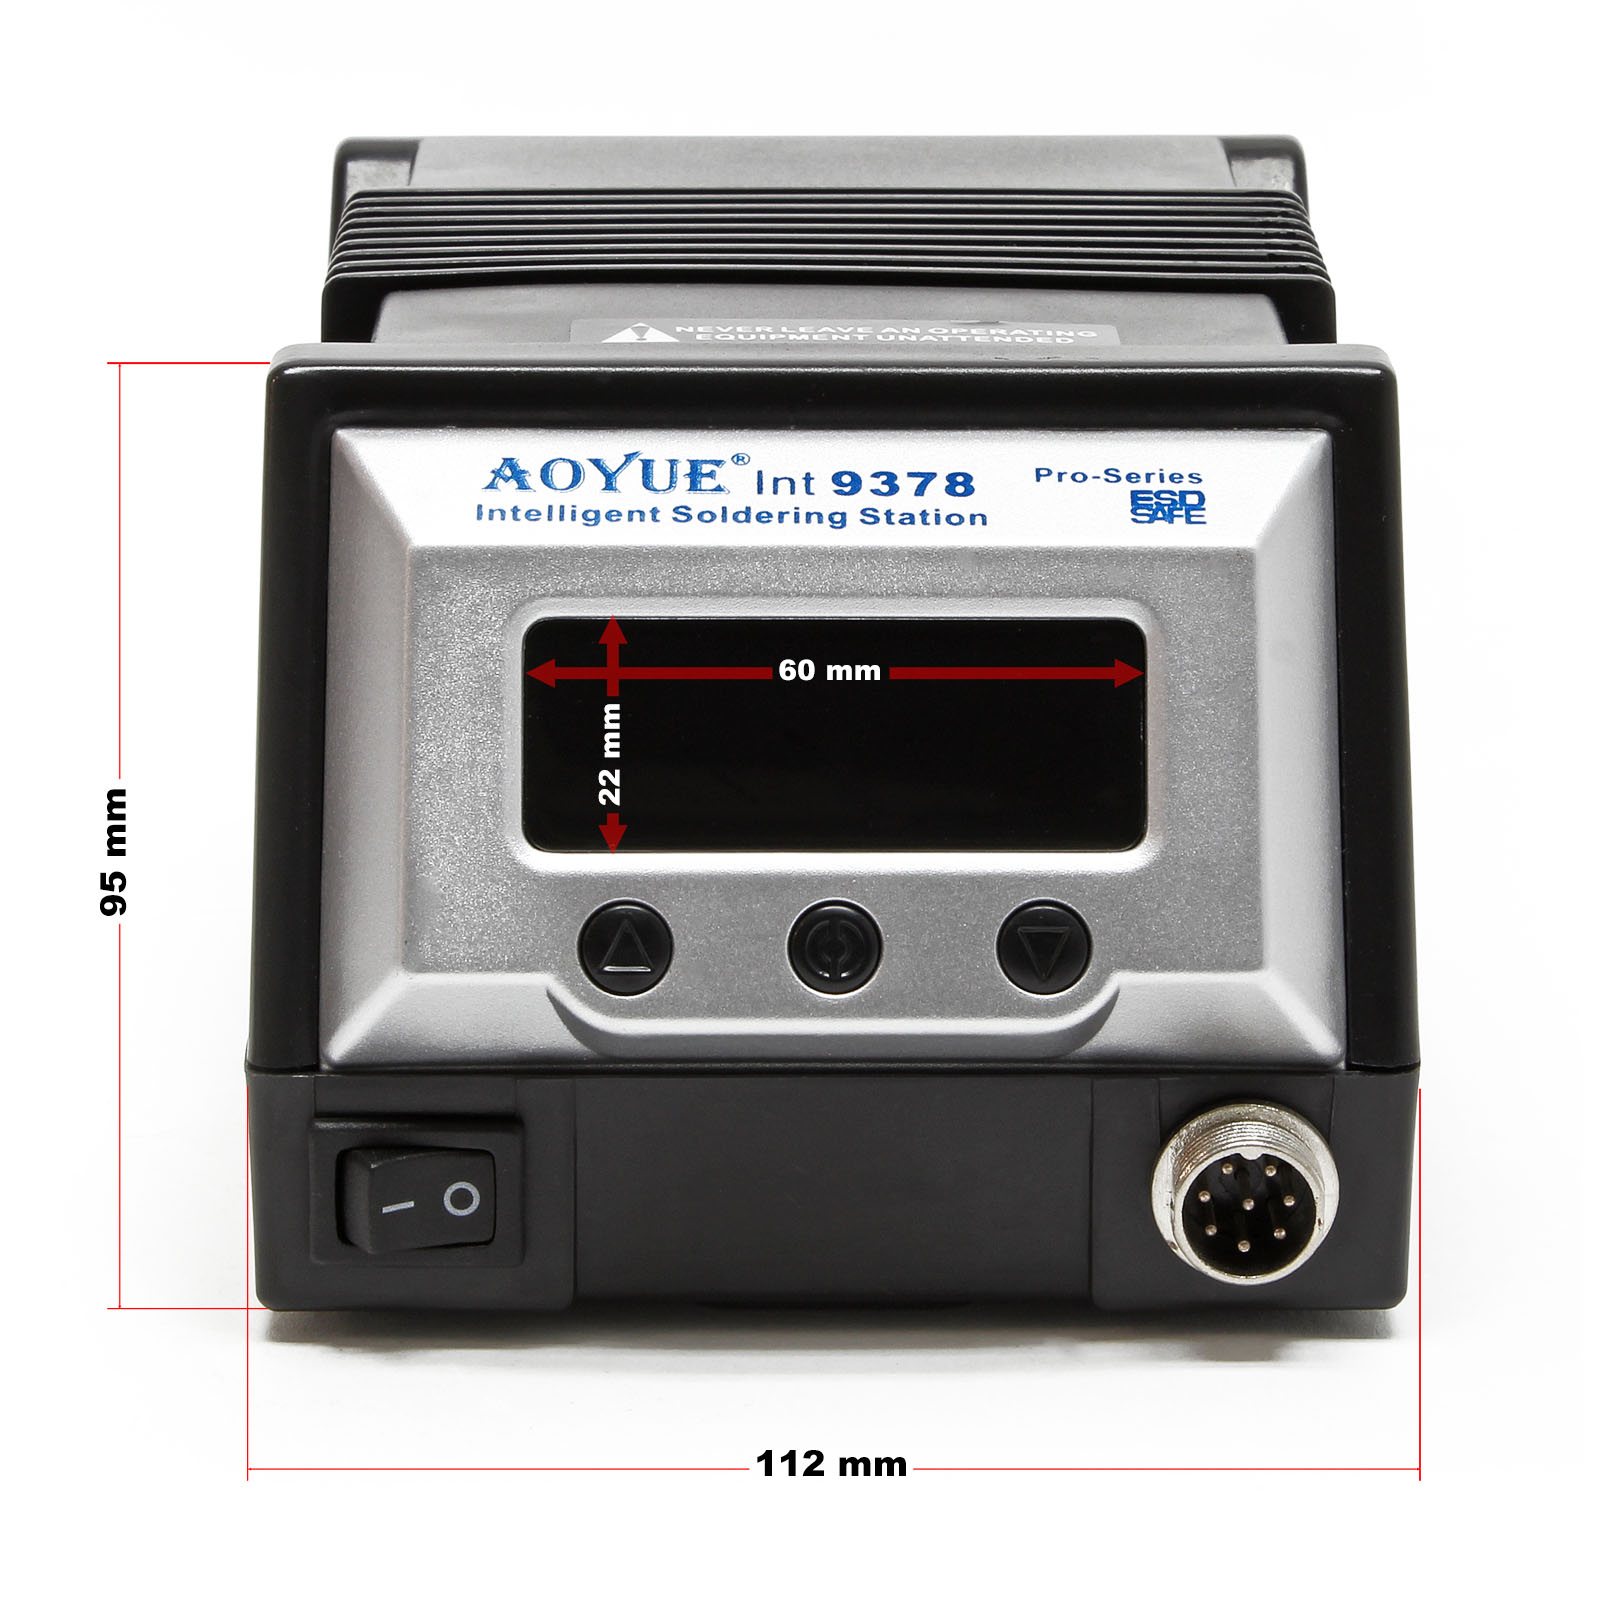 AOYUE Int9378 PRO Series Solder station intelligent multi-tool kit